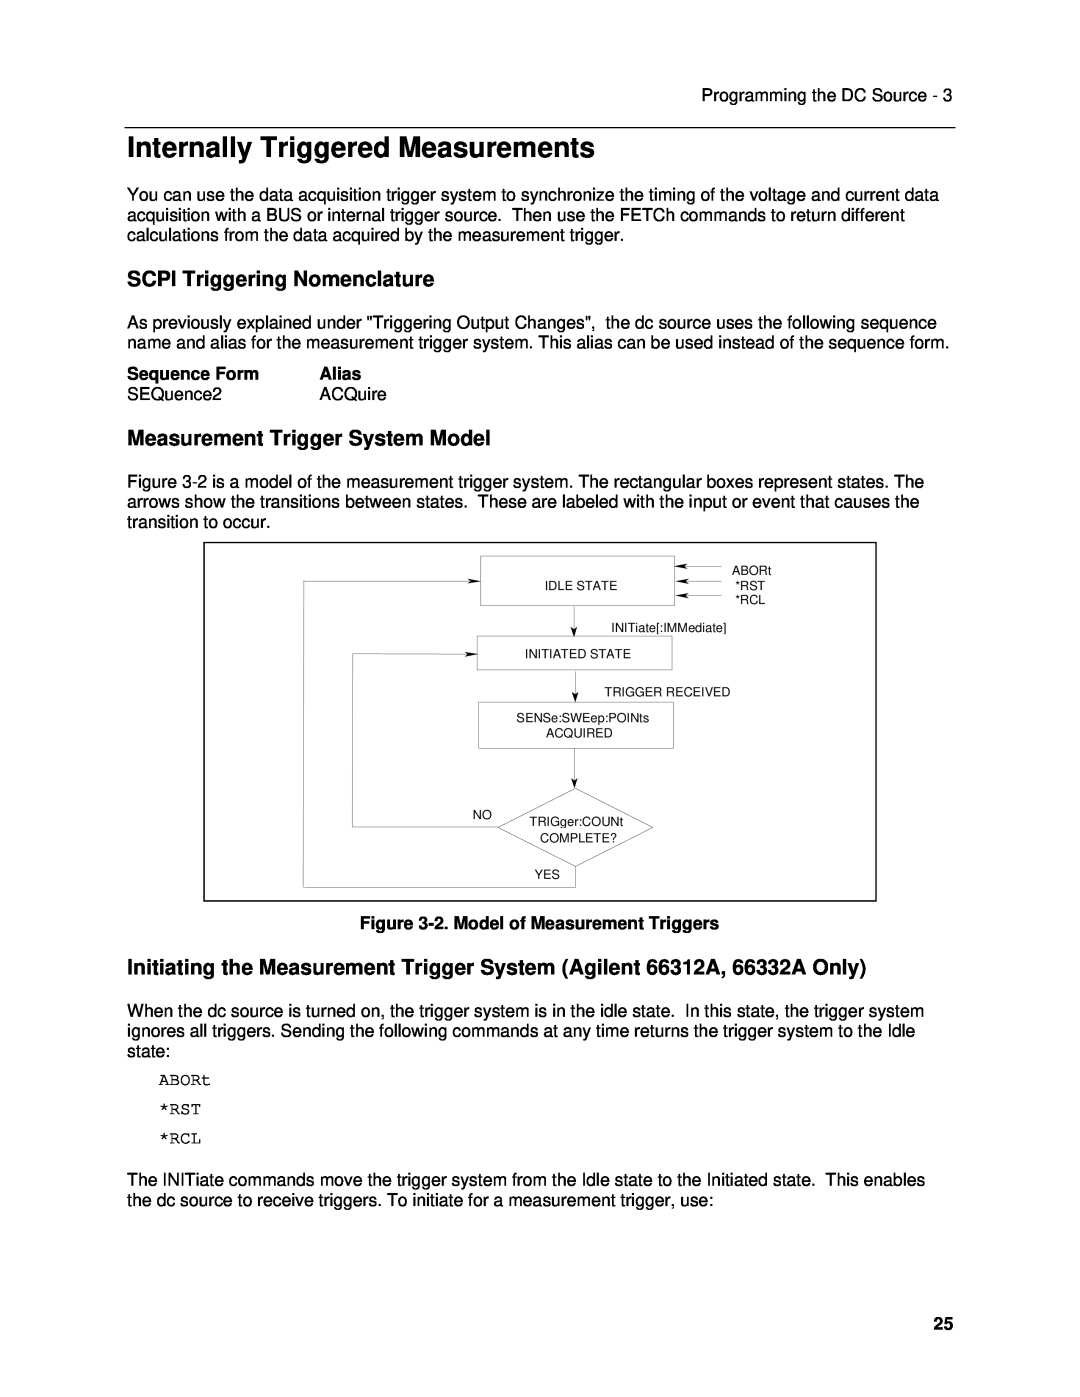 Agilent Technologies 6613C, 6634B, 66332A, 6633B, 6632B Internally Triggered Measurements, Measurement Trigger System Model 